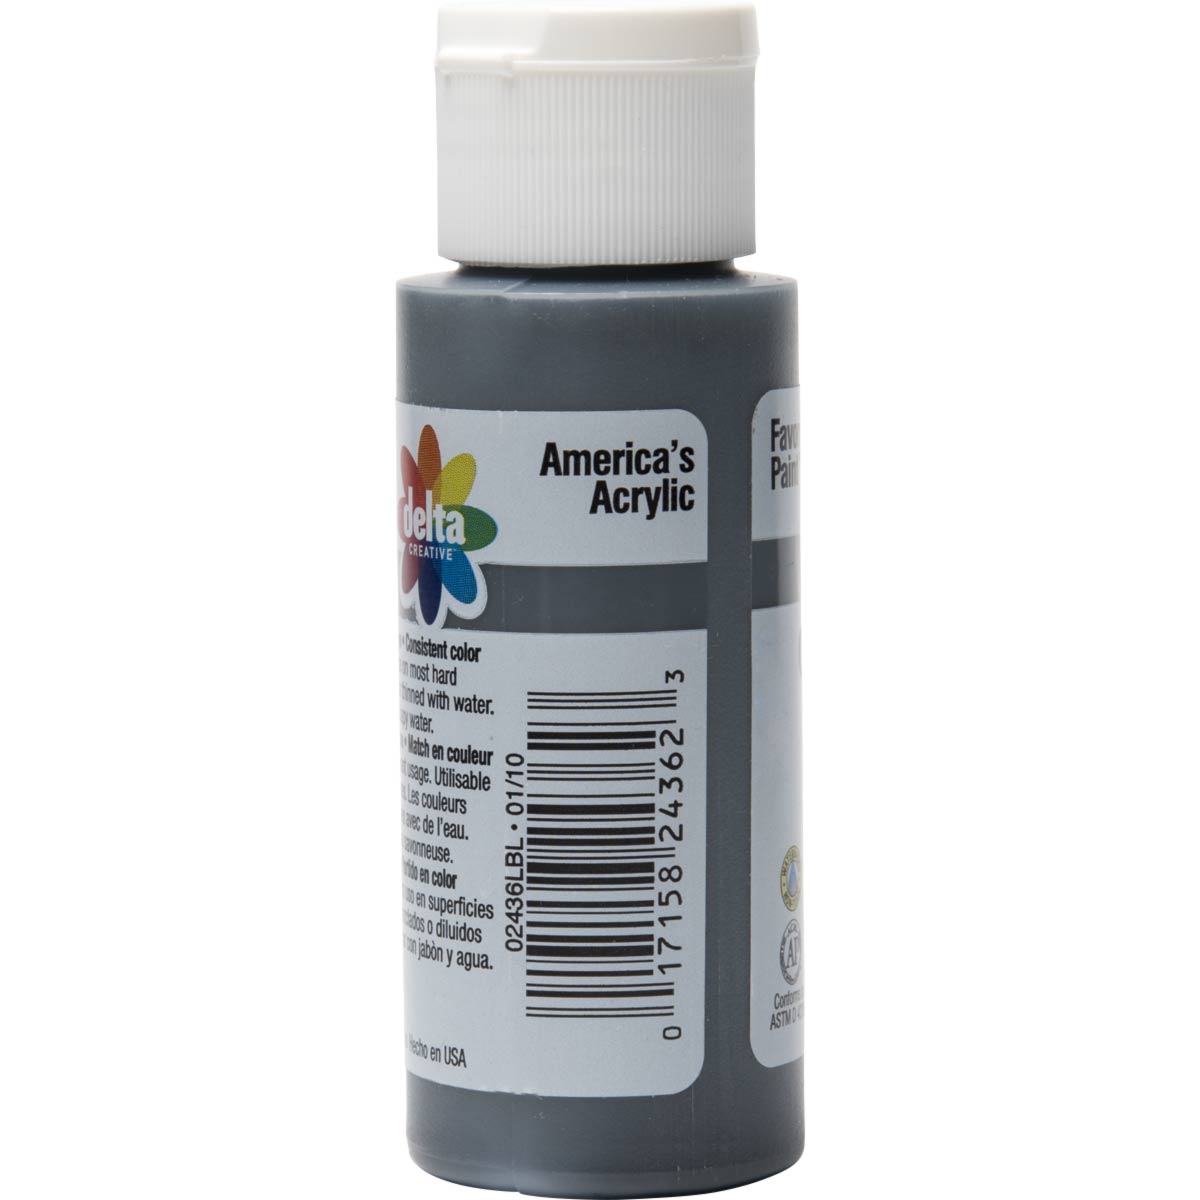 Delta Ceramcoat Acrylic Paint - Charcoal, 2 oz. - 024360202W